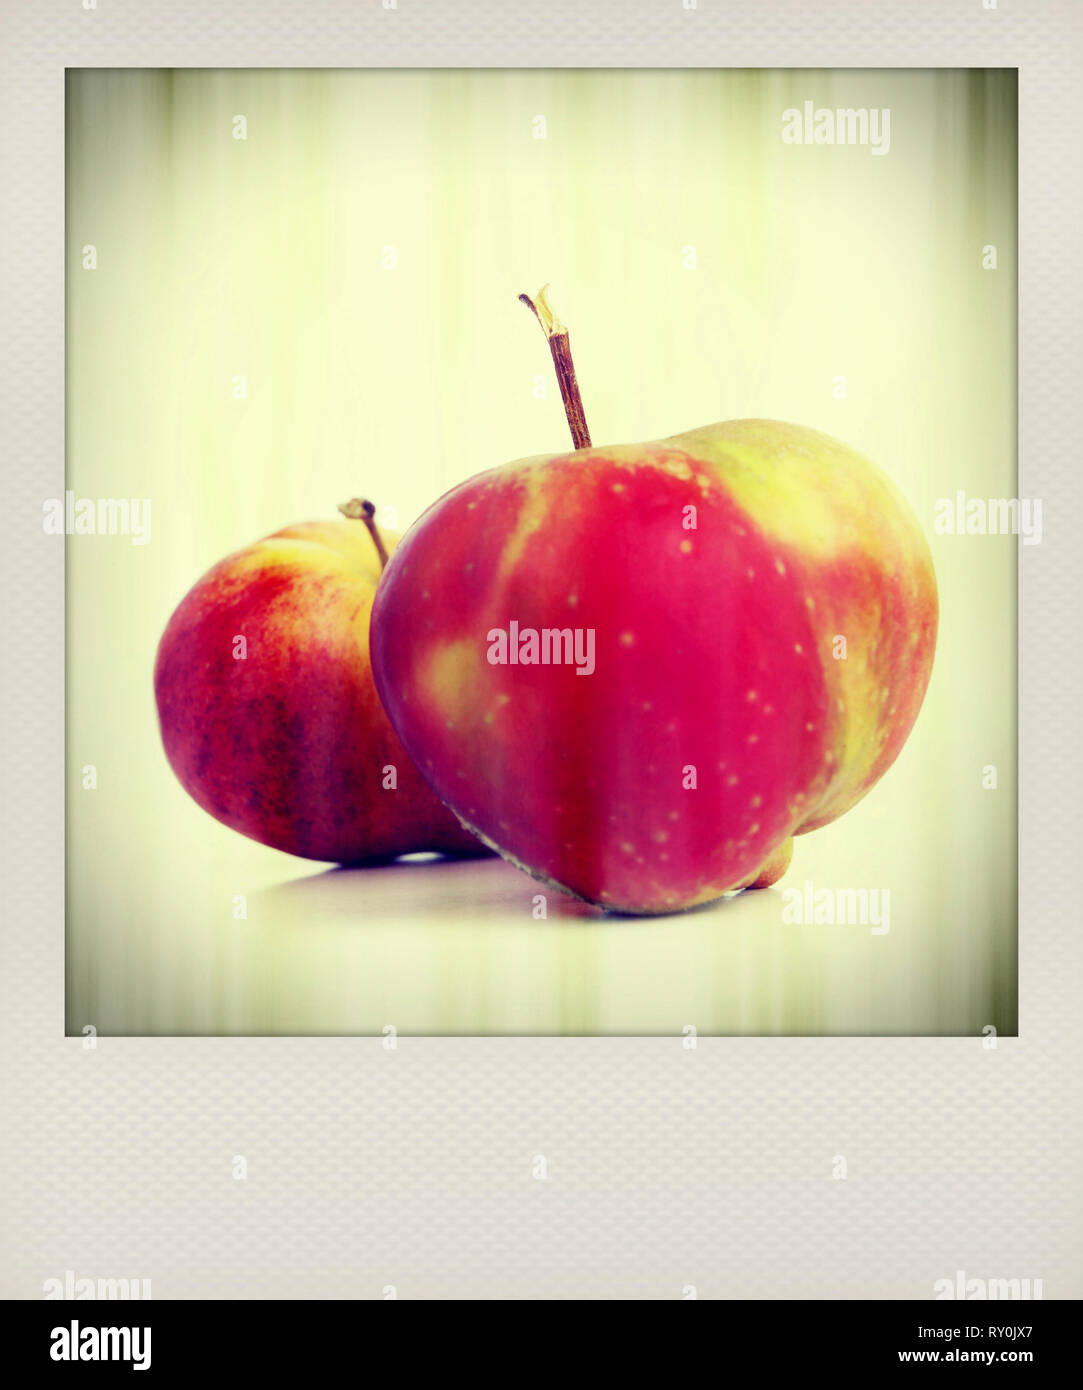 Polaroid photograph of apple Stock Photo - Alamy